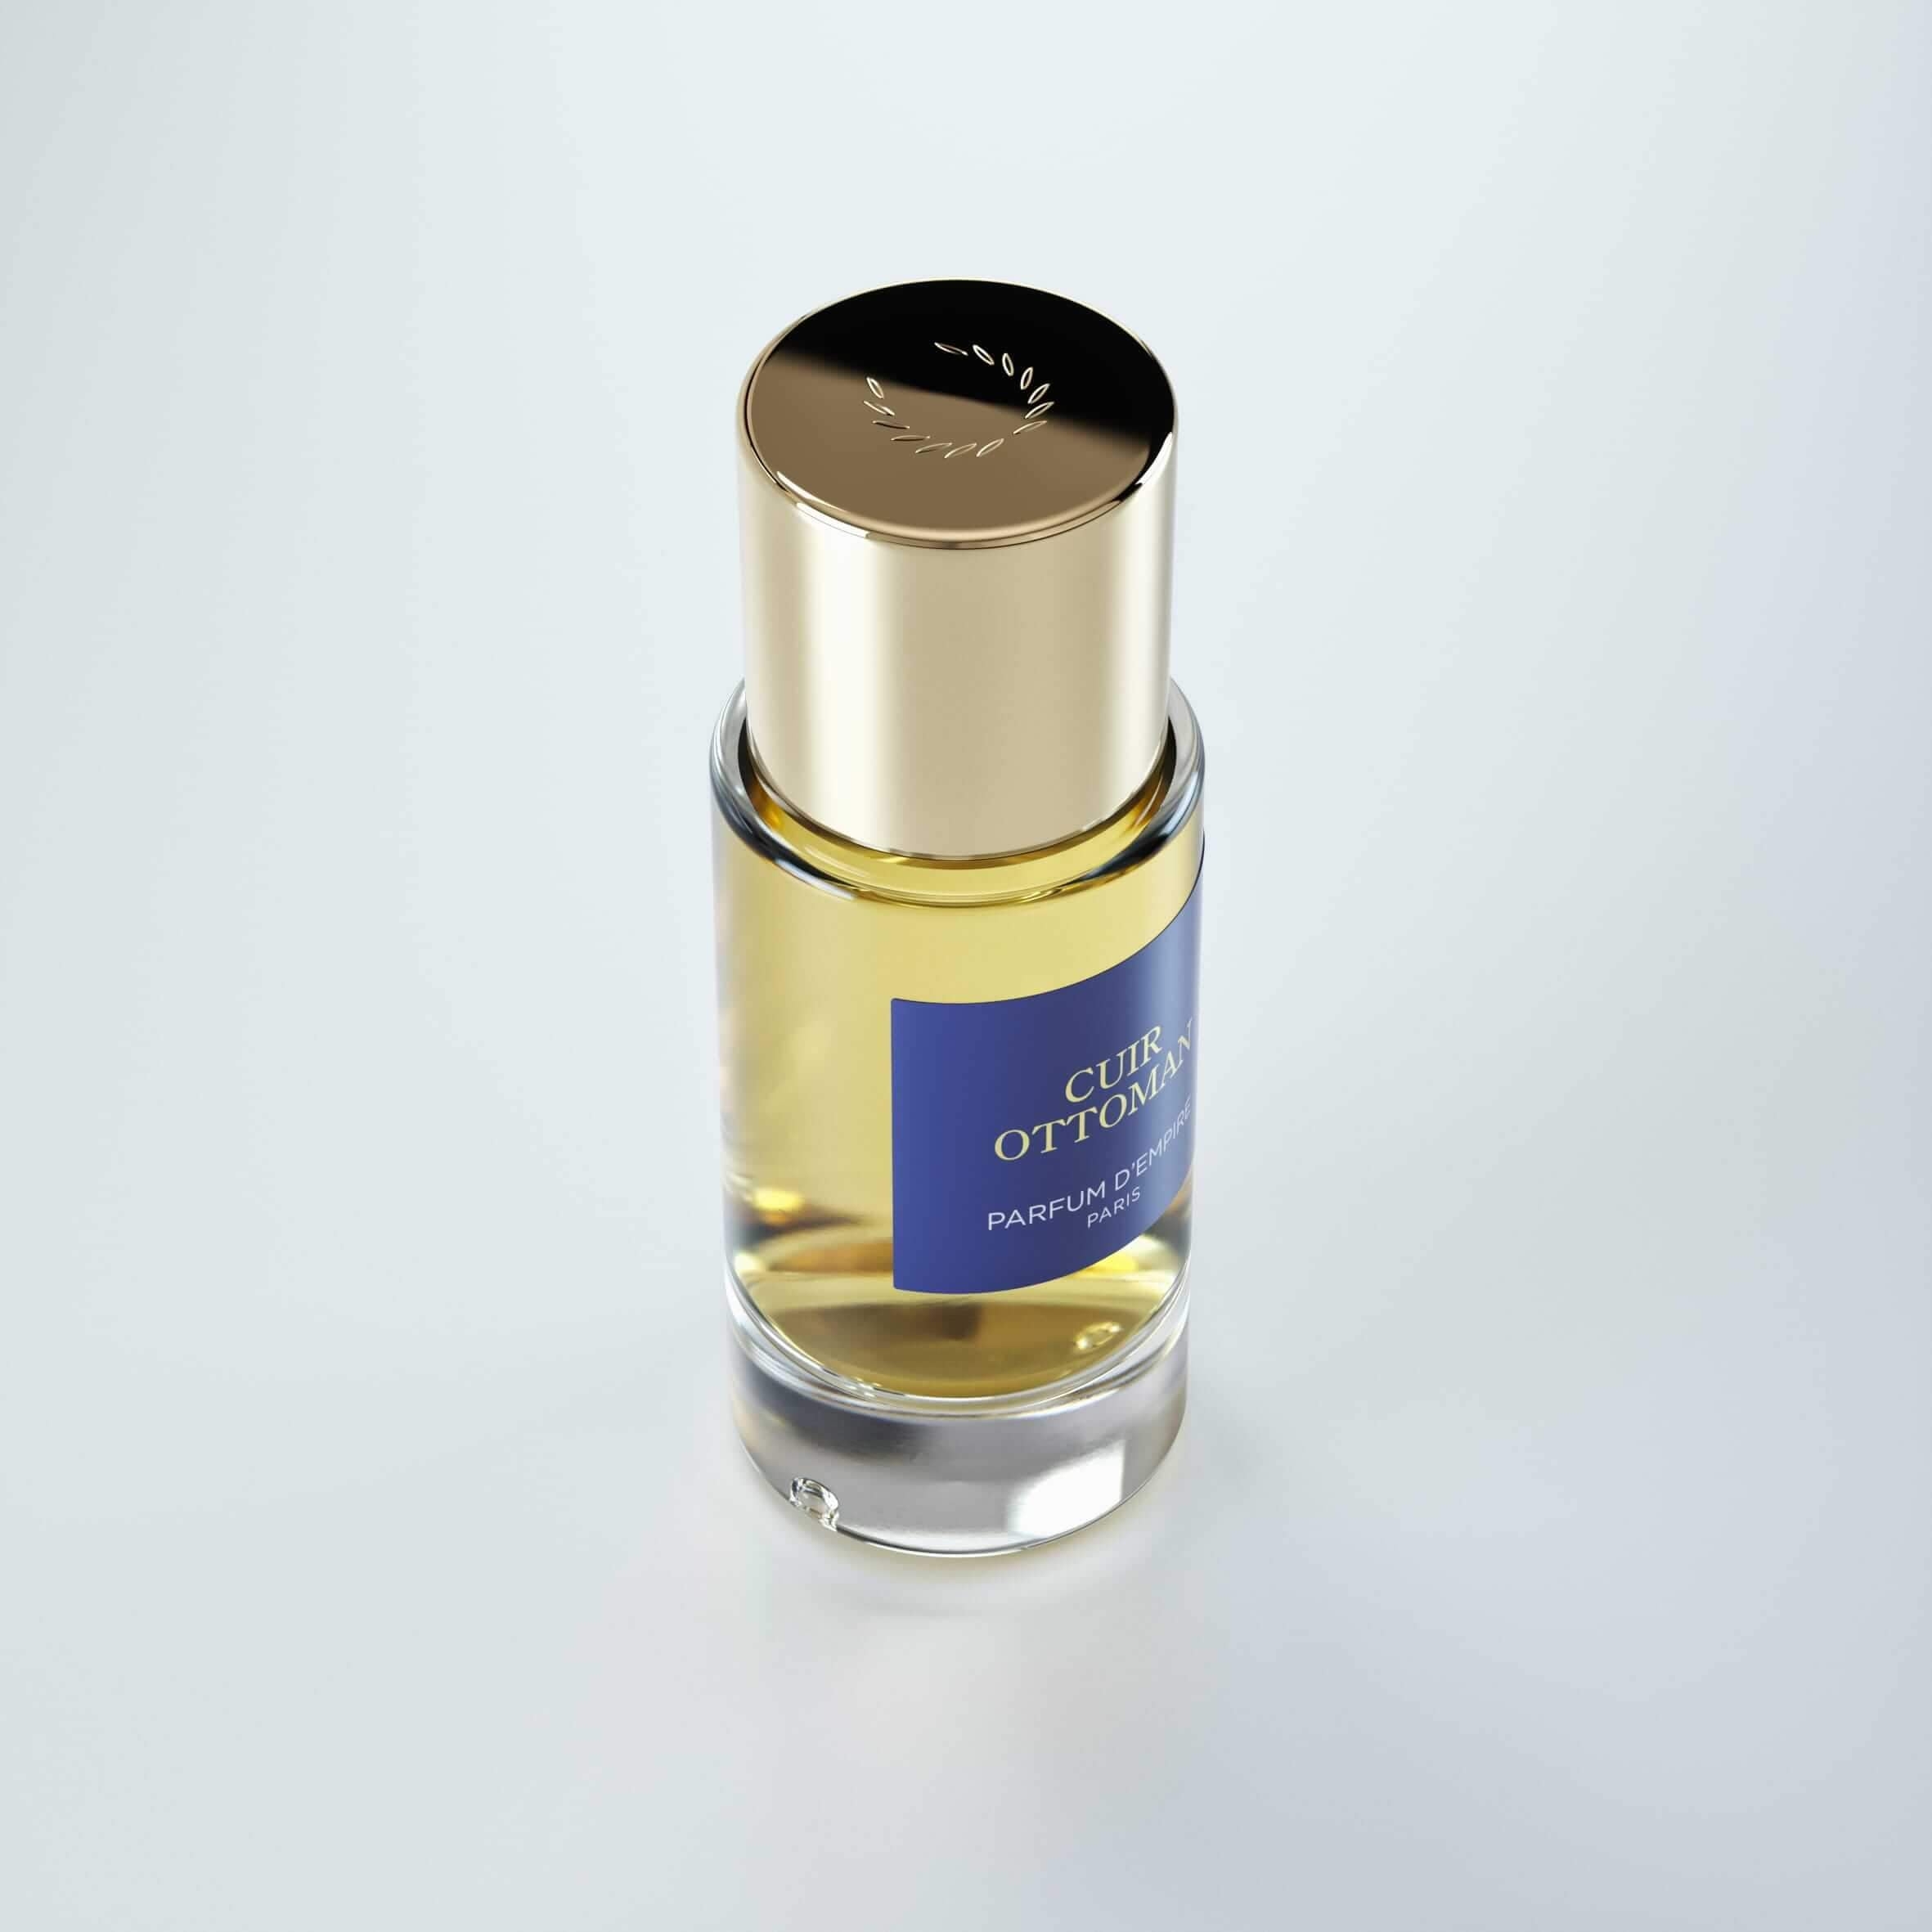 Parfum d'Empire - Cuir Ottoman | Perfume Lounge